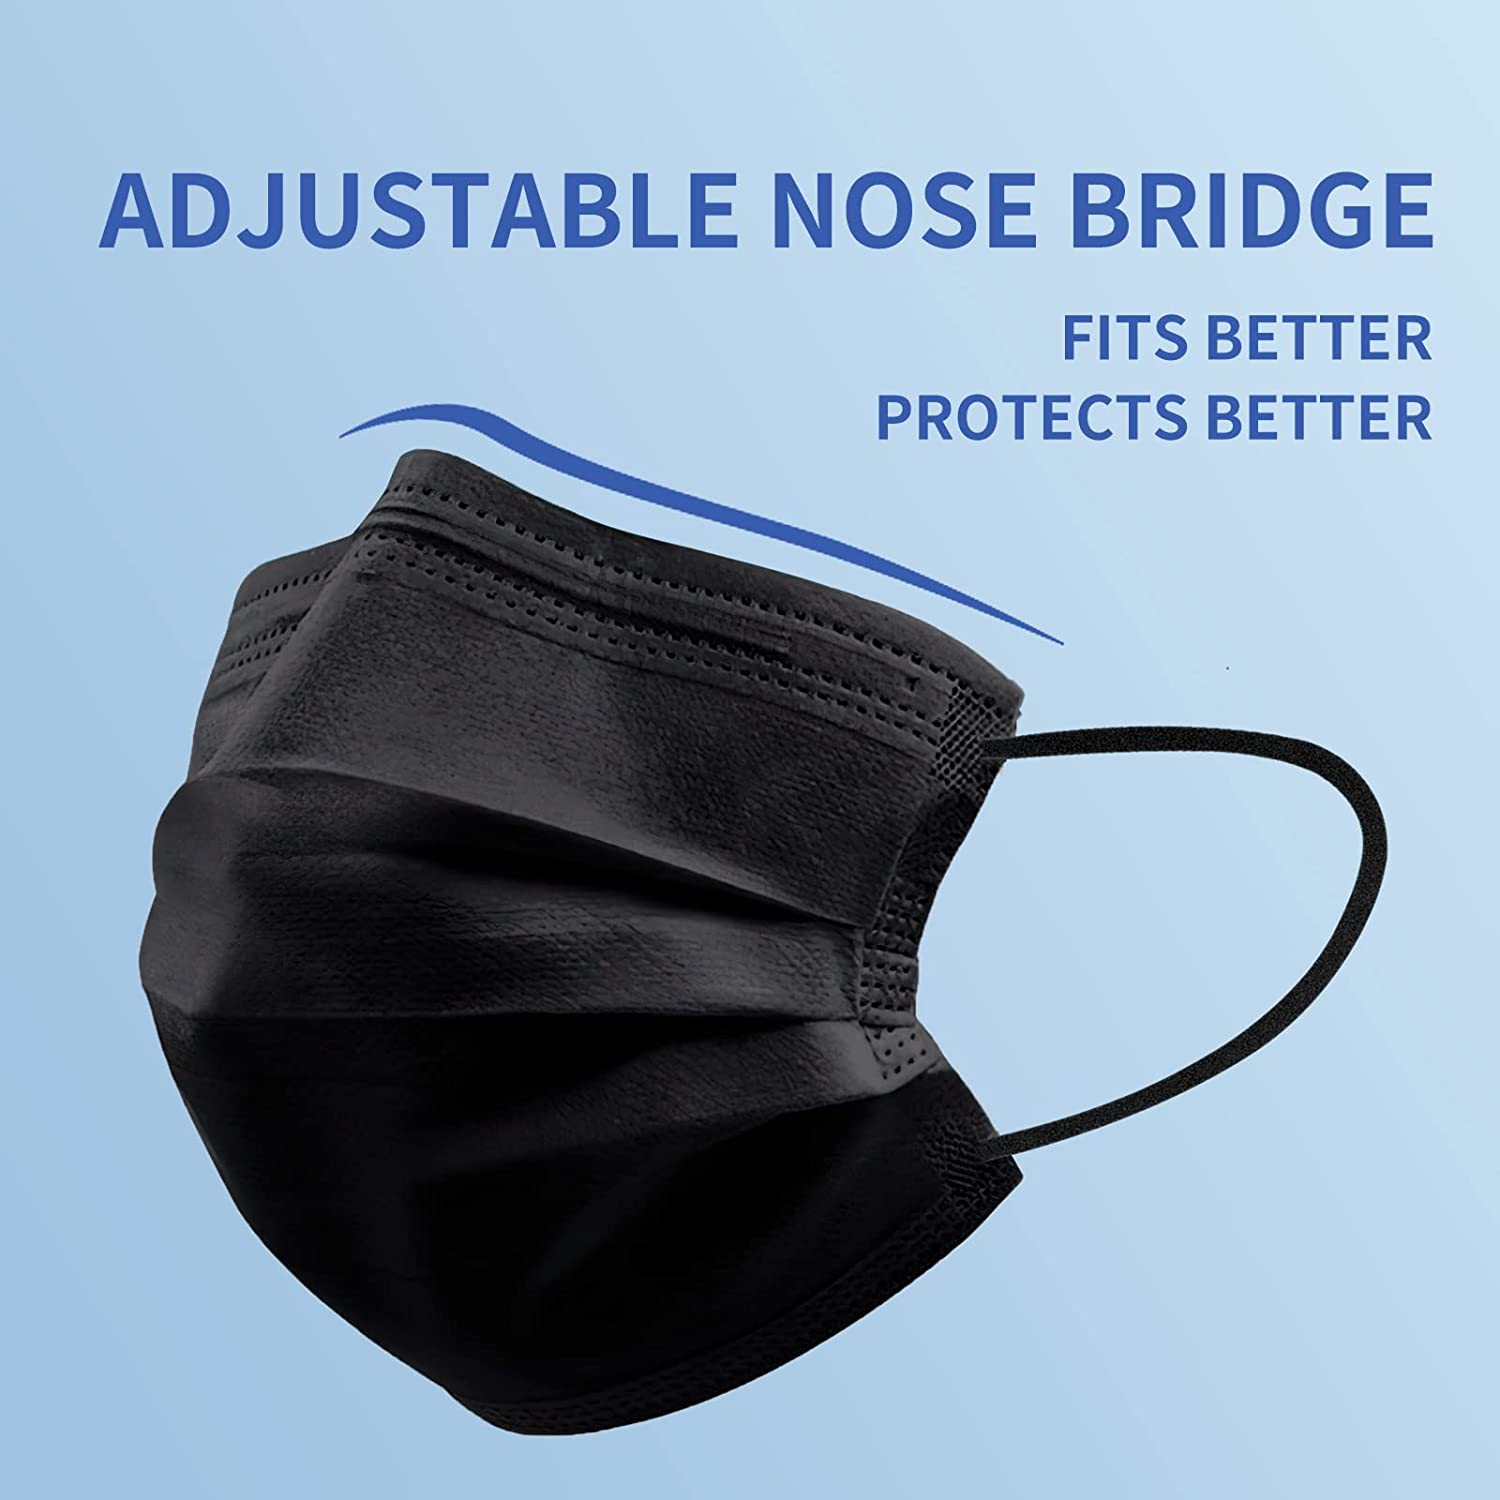 INTCO 50 PCS Black Disposable Face Masks, Breathable 3-Ply - USA Medical Supply